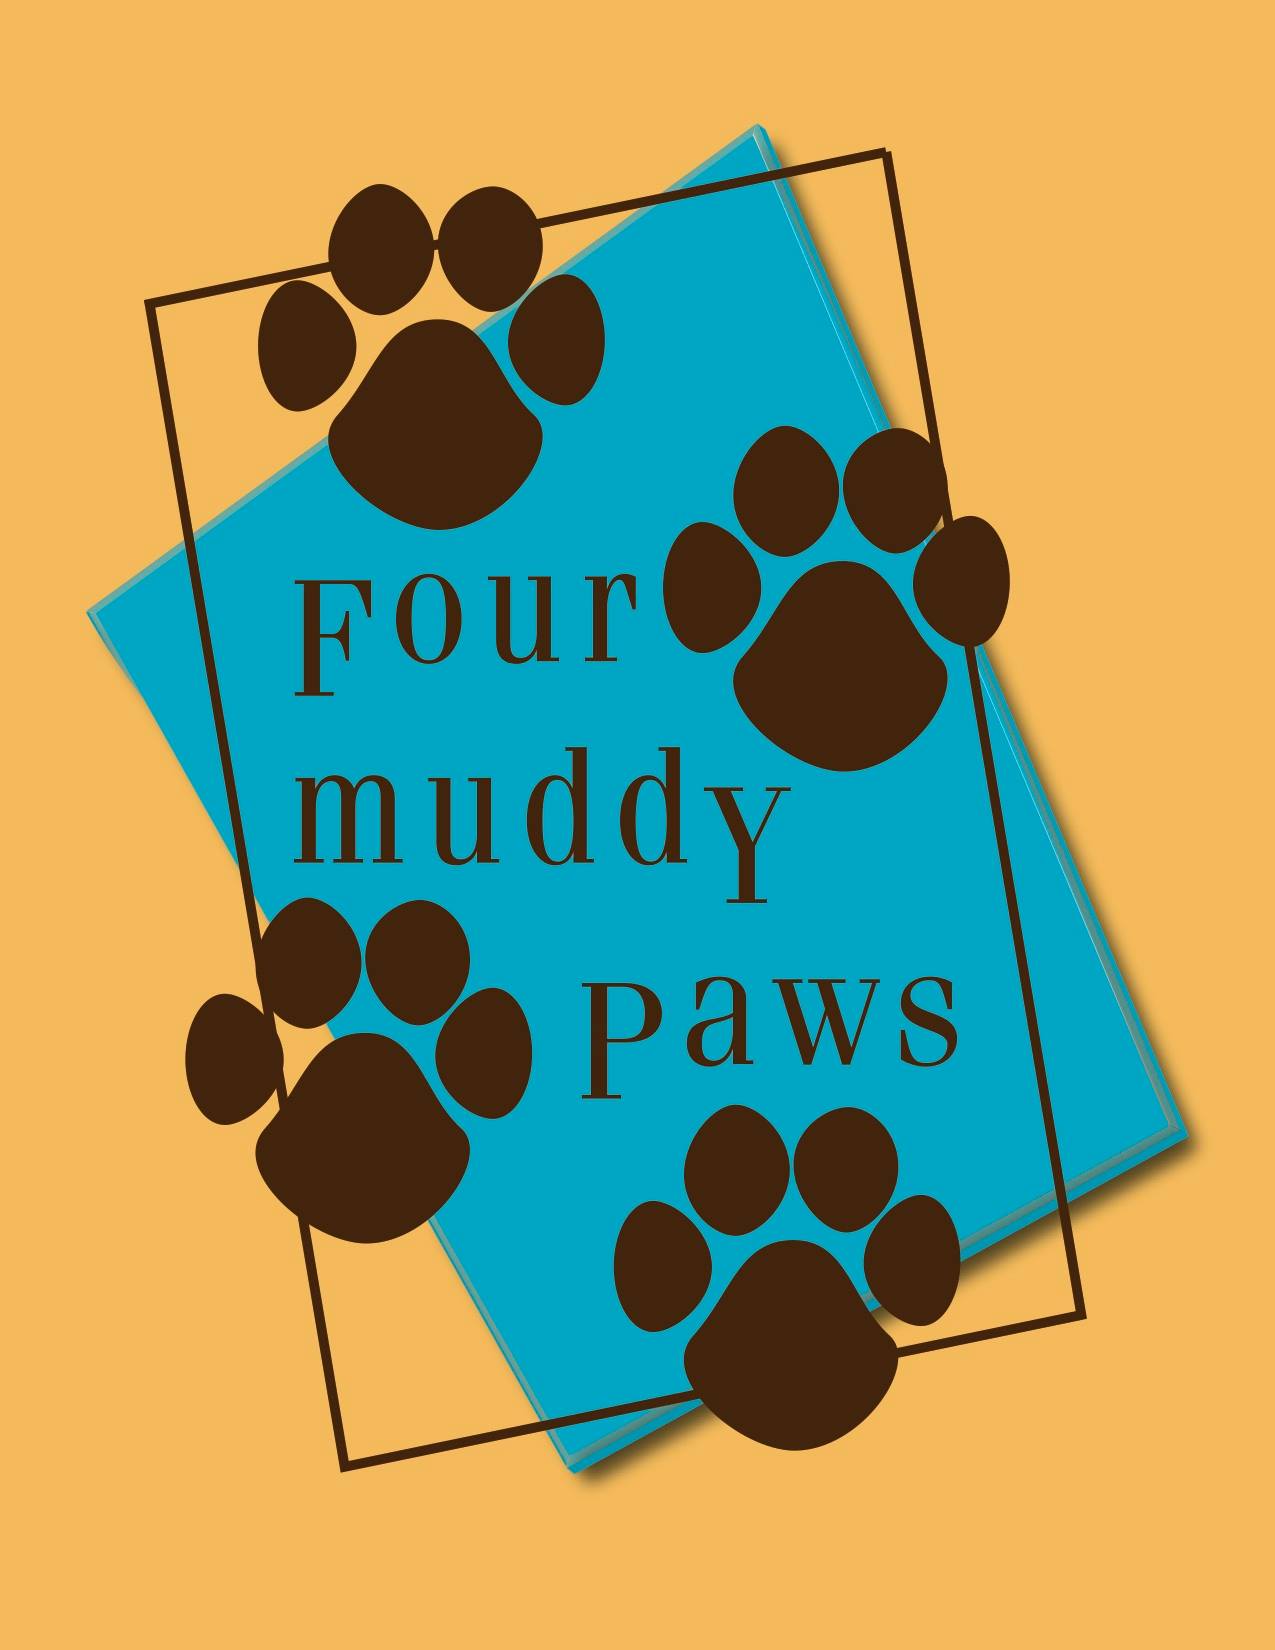 Company logo of Four Muddy Paws